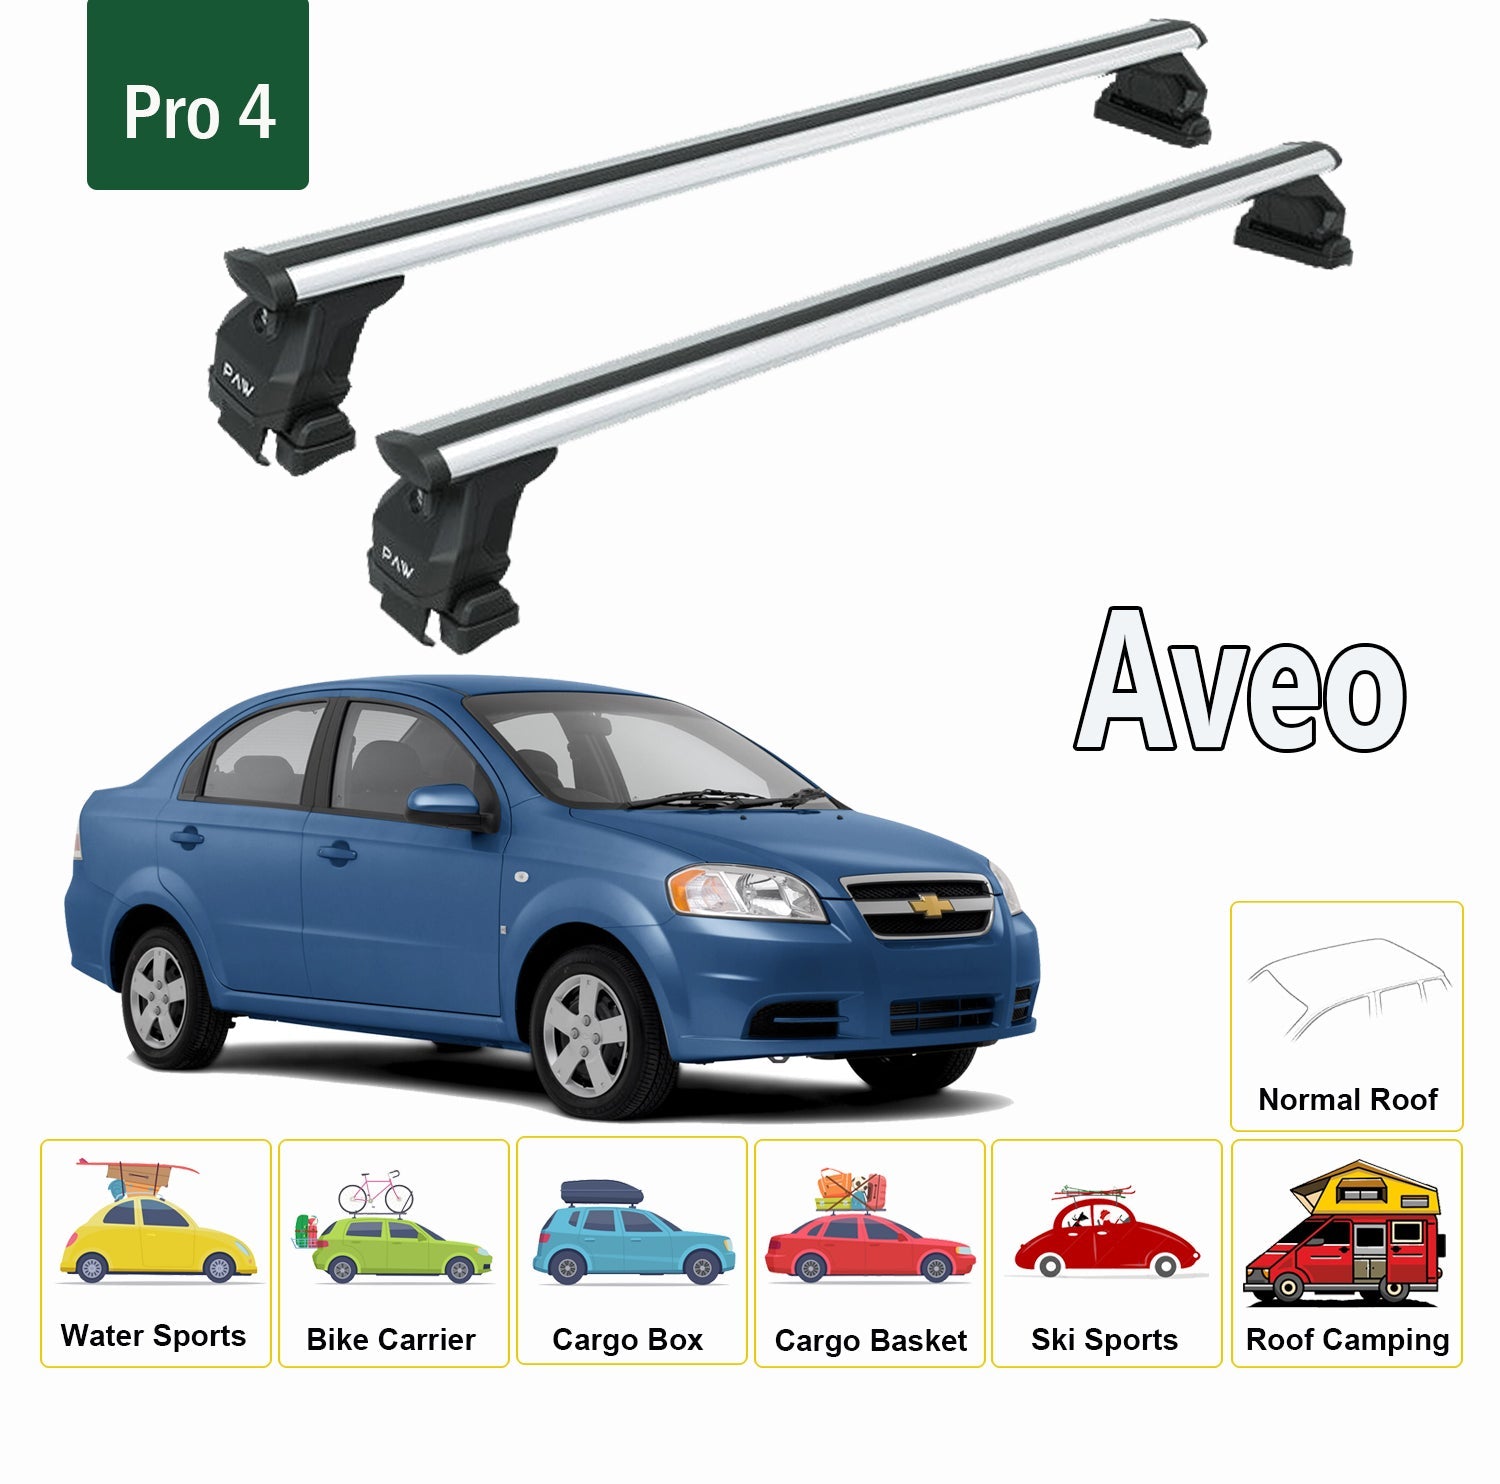 For Chevrolet Aveo 2004-2011 Roof Rack System, Aluminium Cross Bar, Metal Bracket, Normal Roof, Black-3